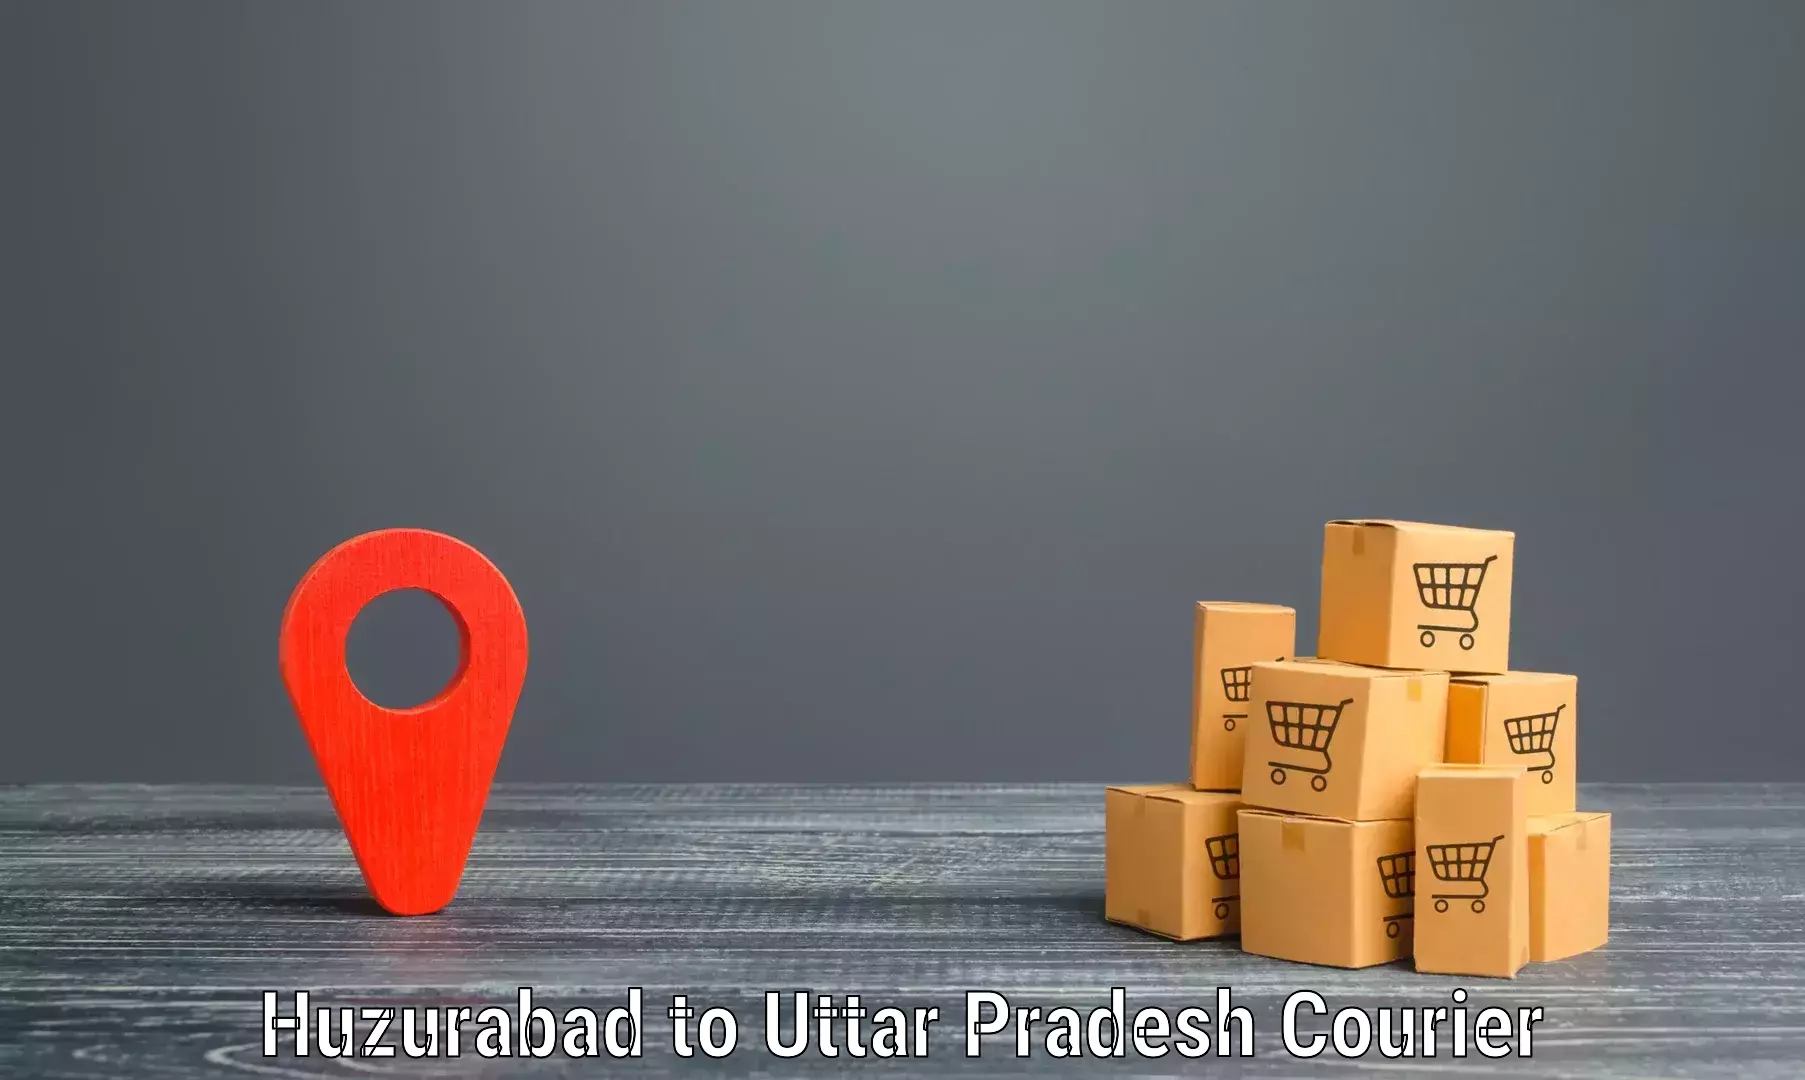 Global logistics network Huzurabad to Harraiya